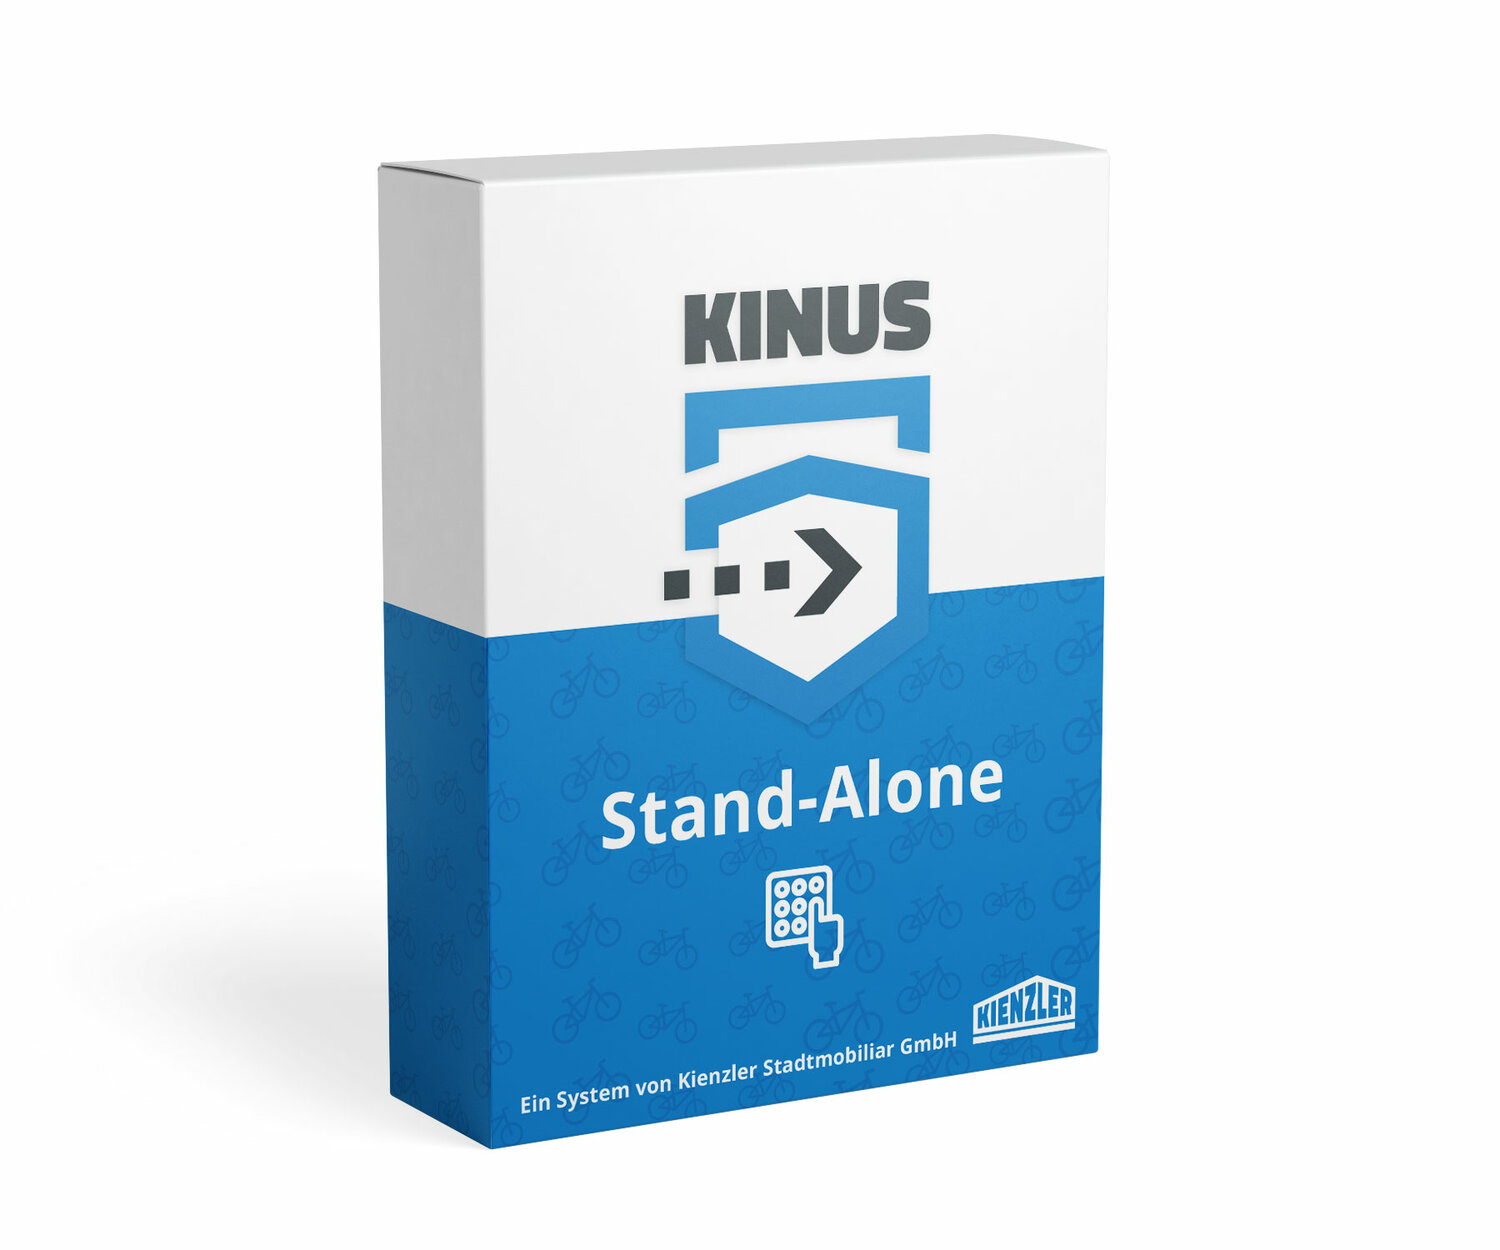 Produktverpackung der Software KINUS Stand-Alone